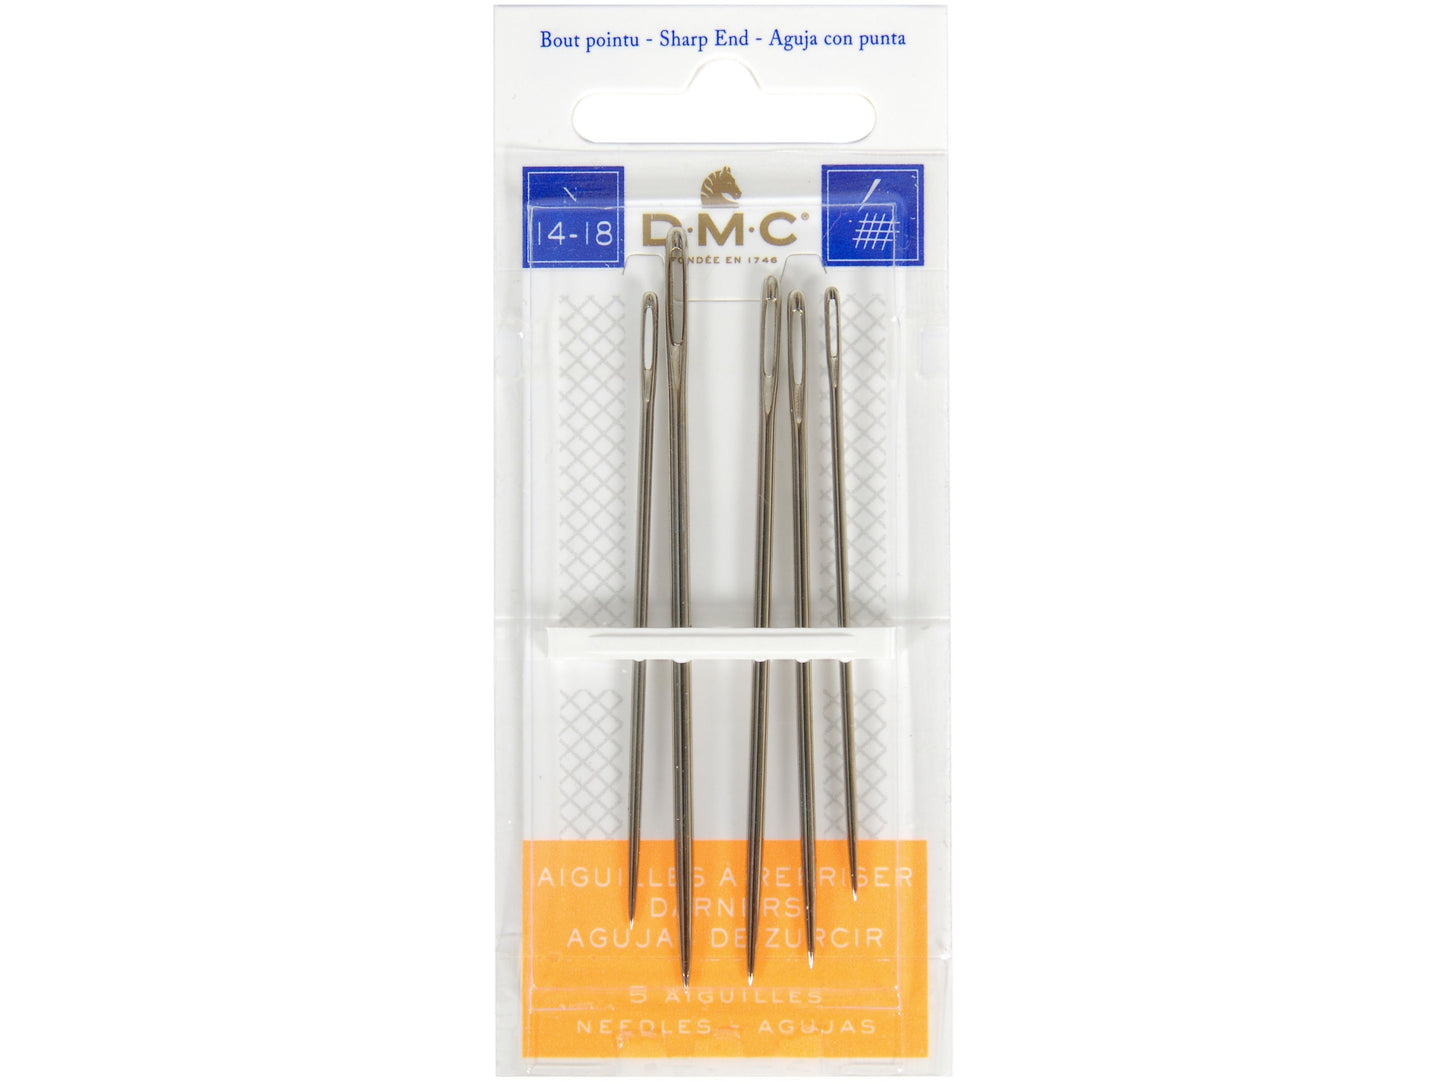 DMC Darners Hand Needles - Size 14/18 - 5pcs